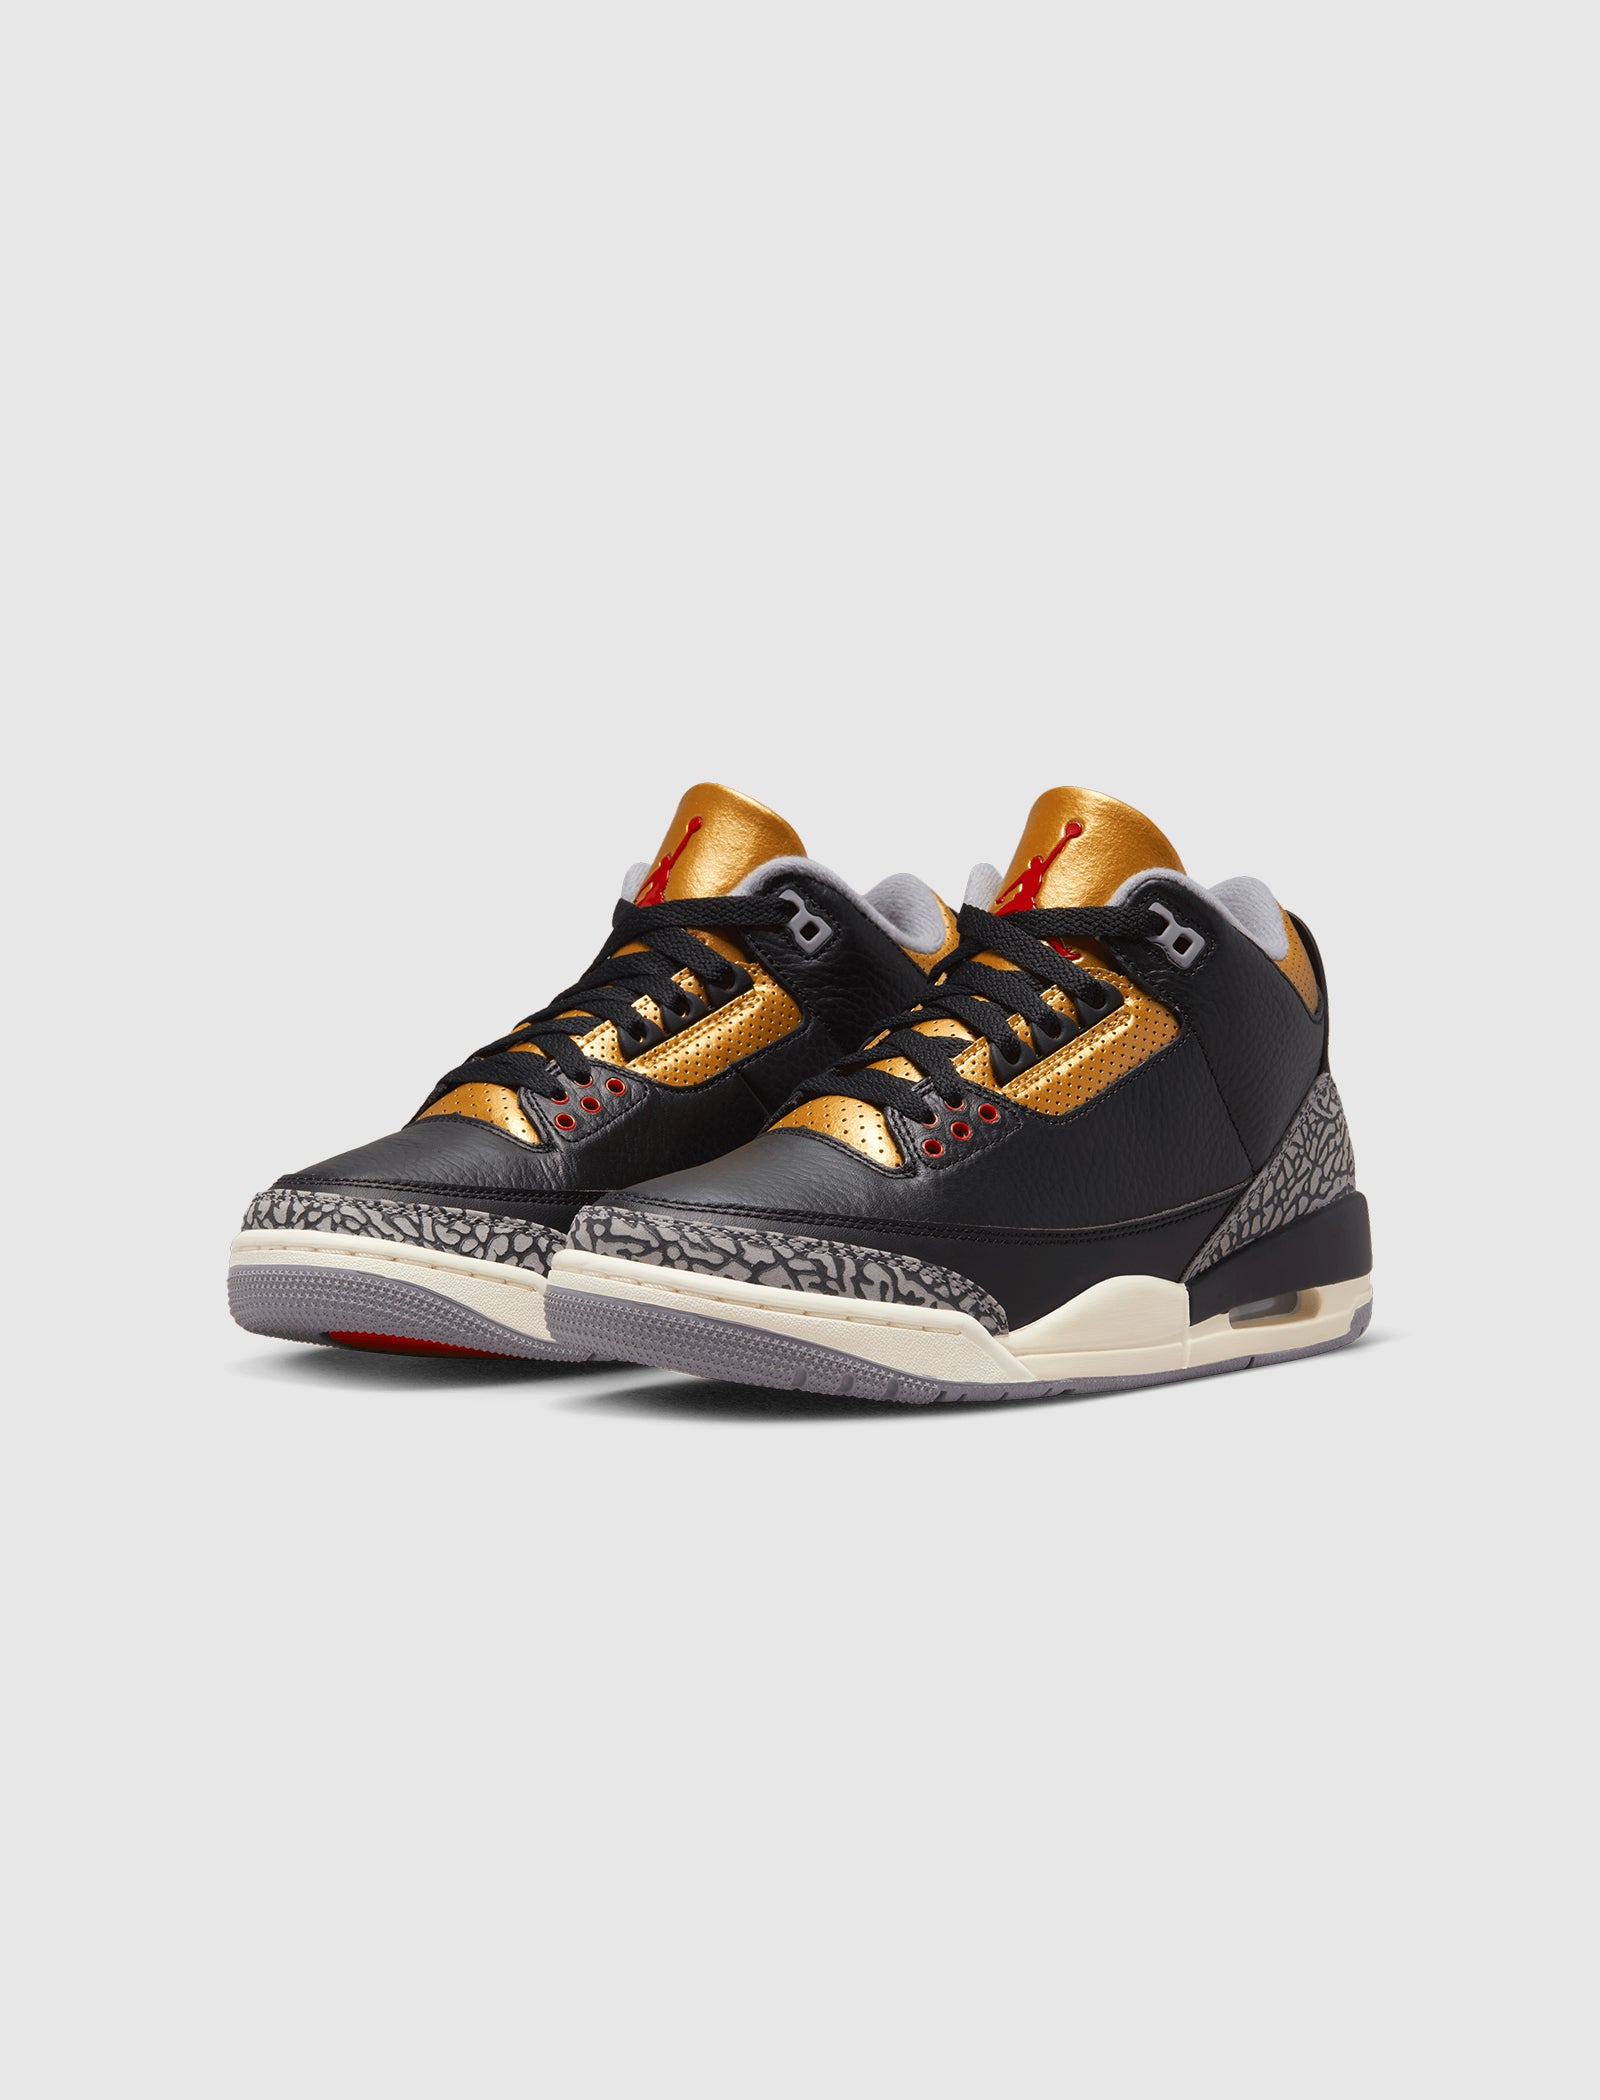 Air Jordan 3 Retro Black Gold